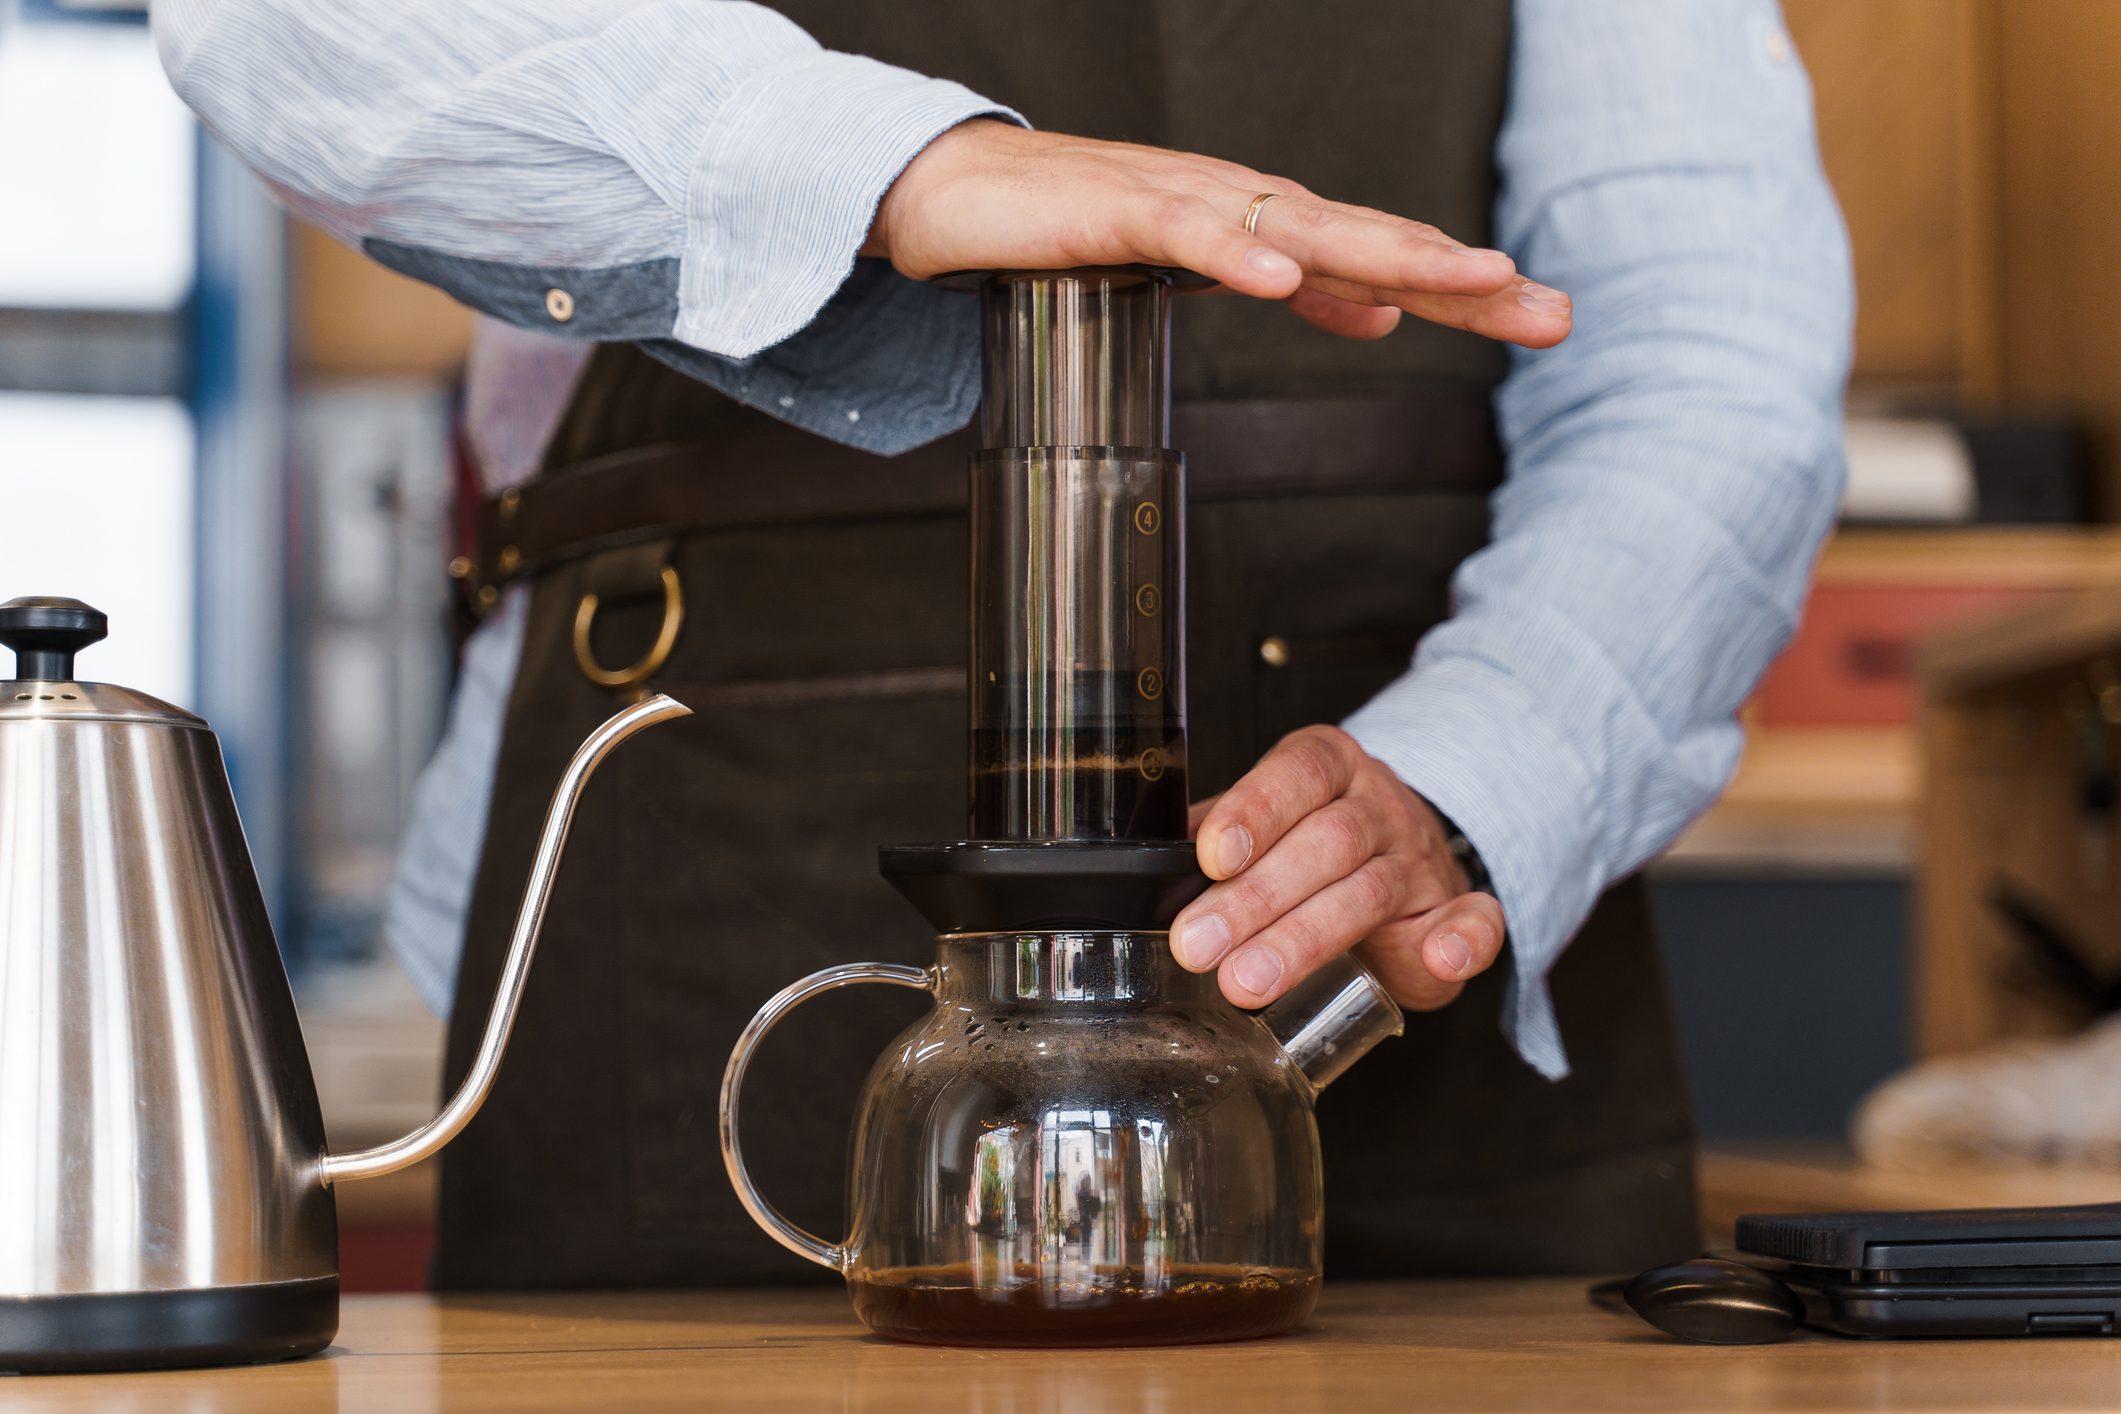 AeroPress: How to Make Coffee Using An AeroPress (4 Brew Methods) - Baked,  Brewed, Beautiful